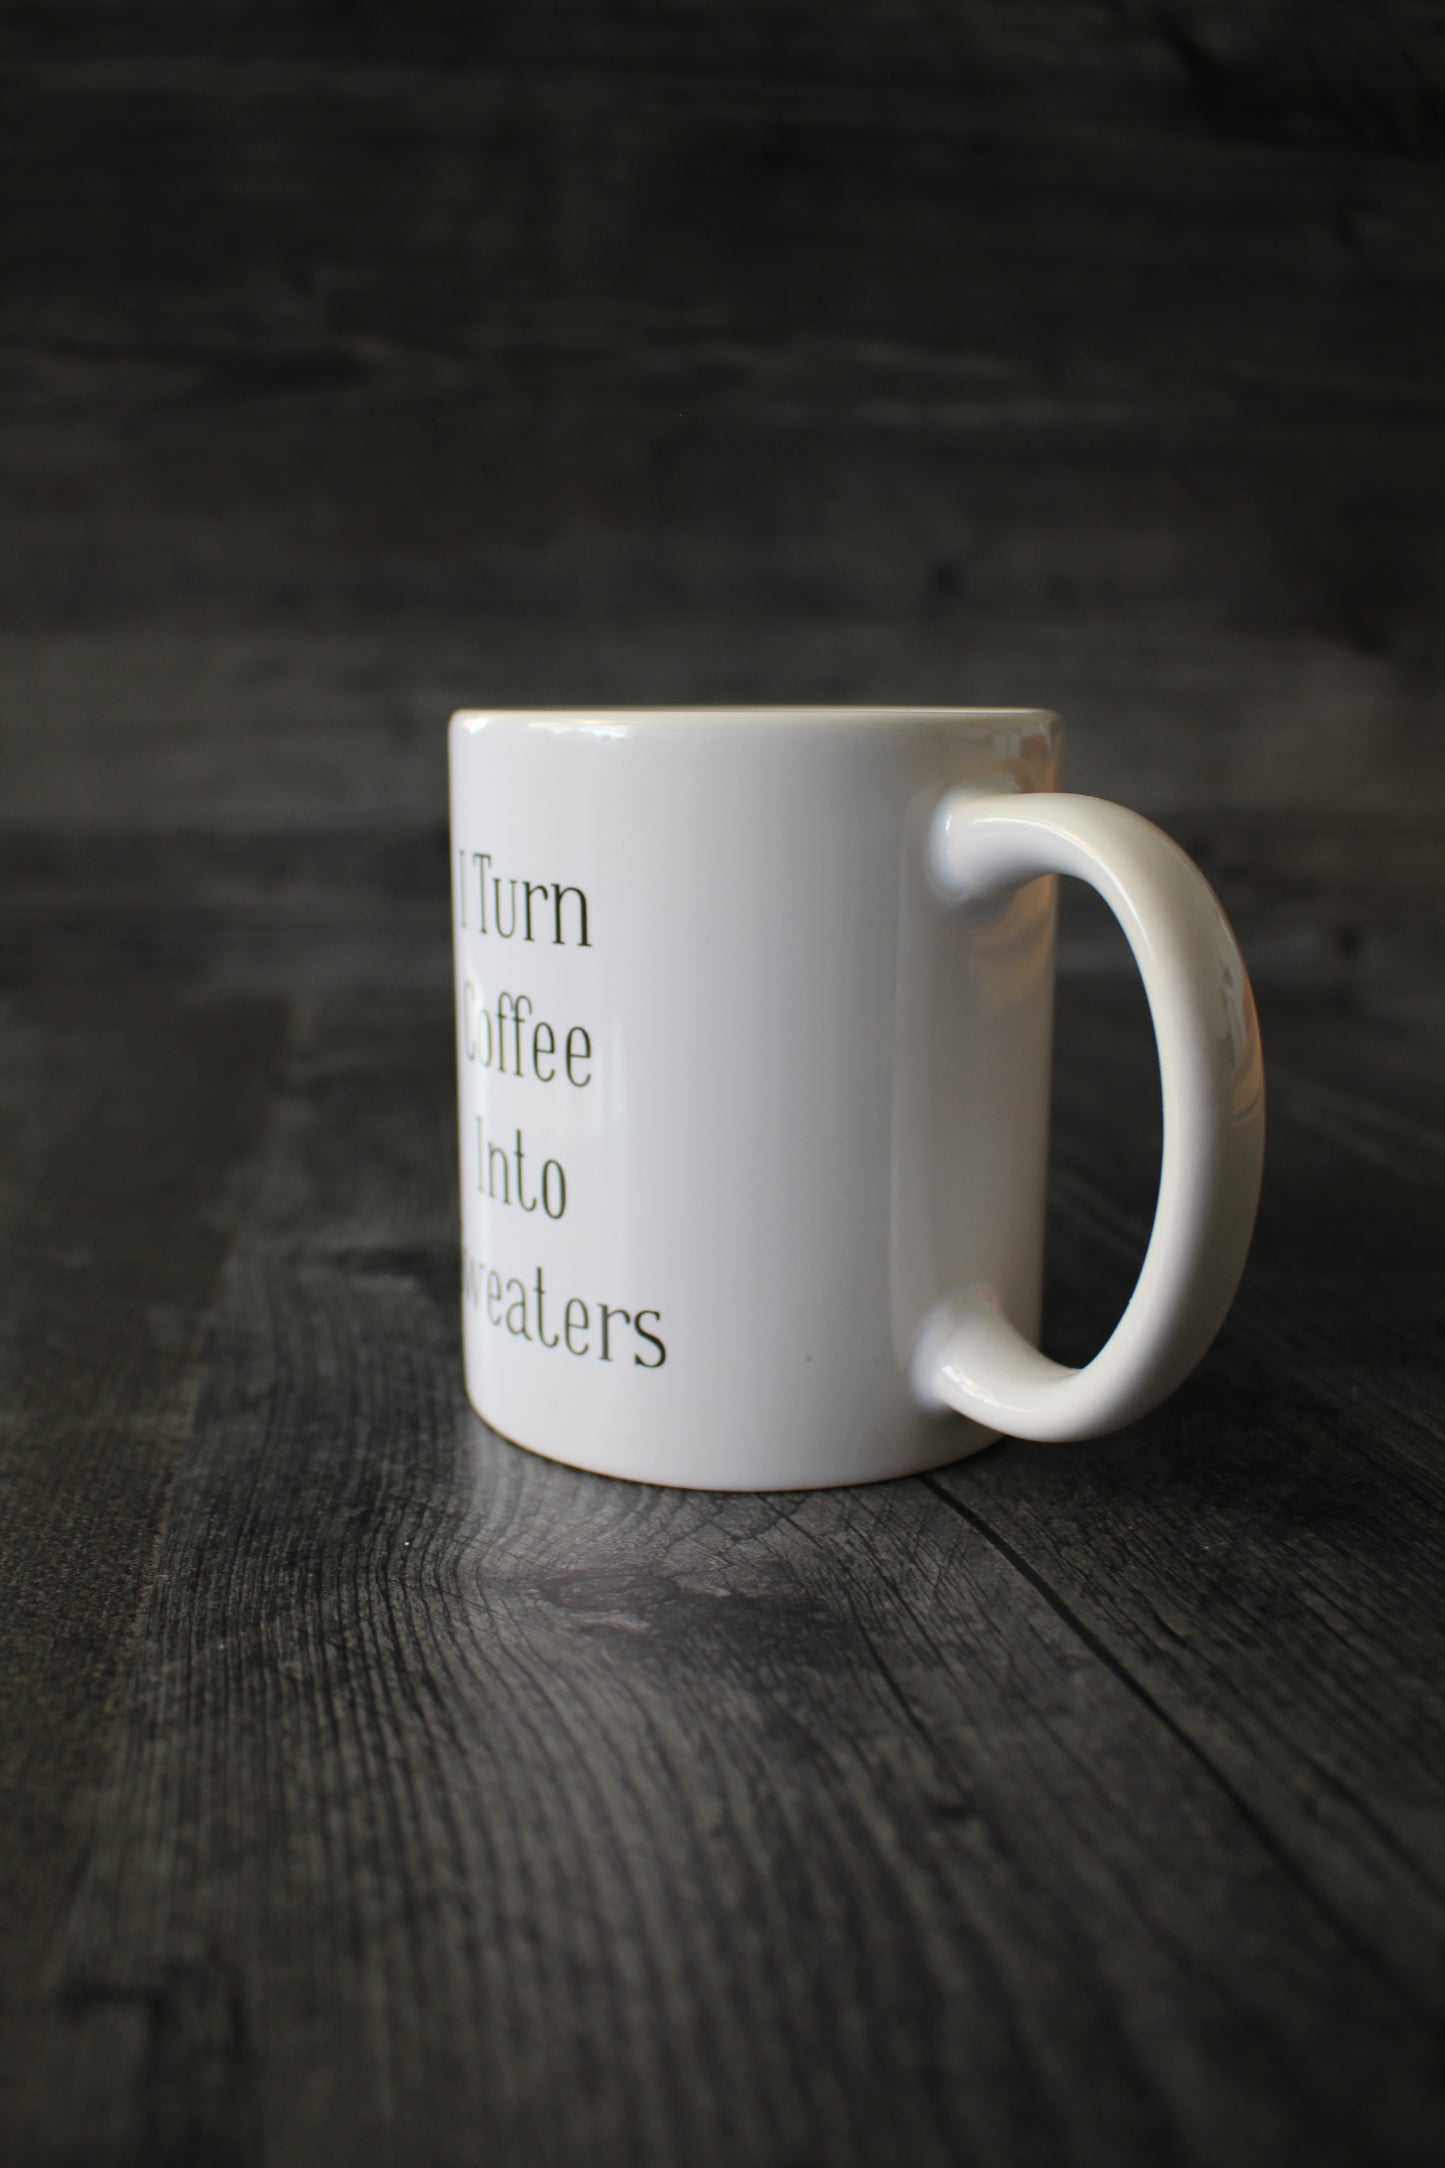 "I Turn Coffee Into Sweaters" Mug